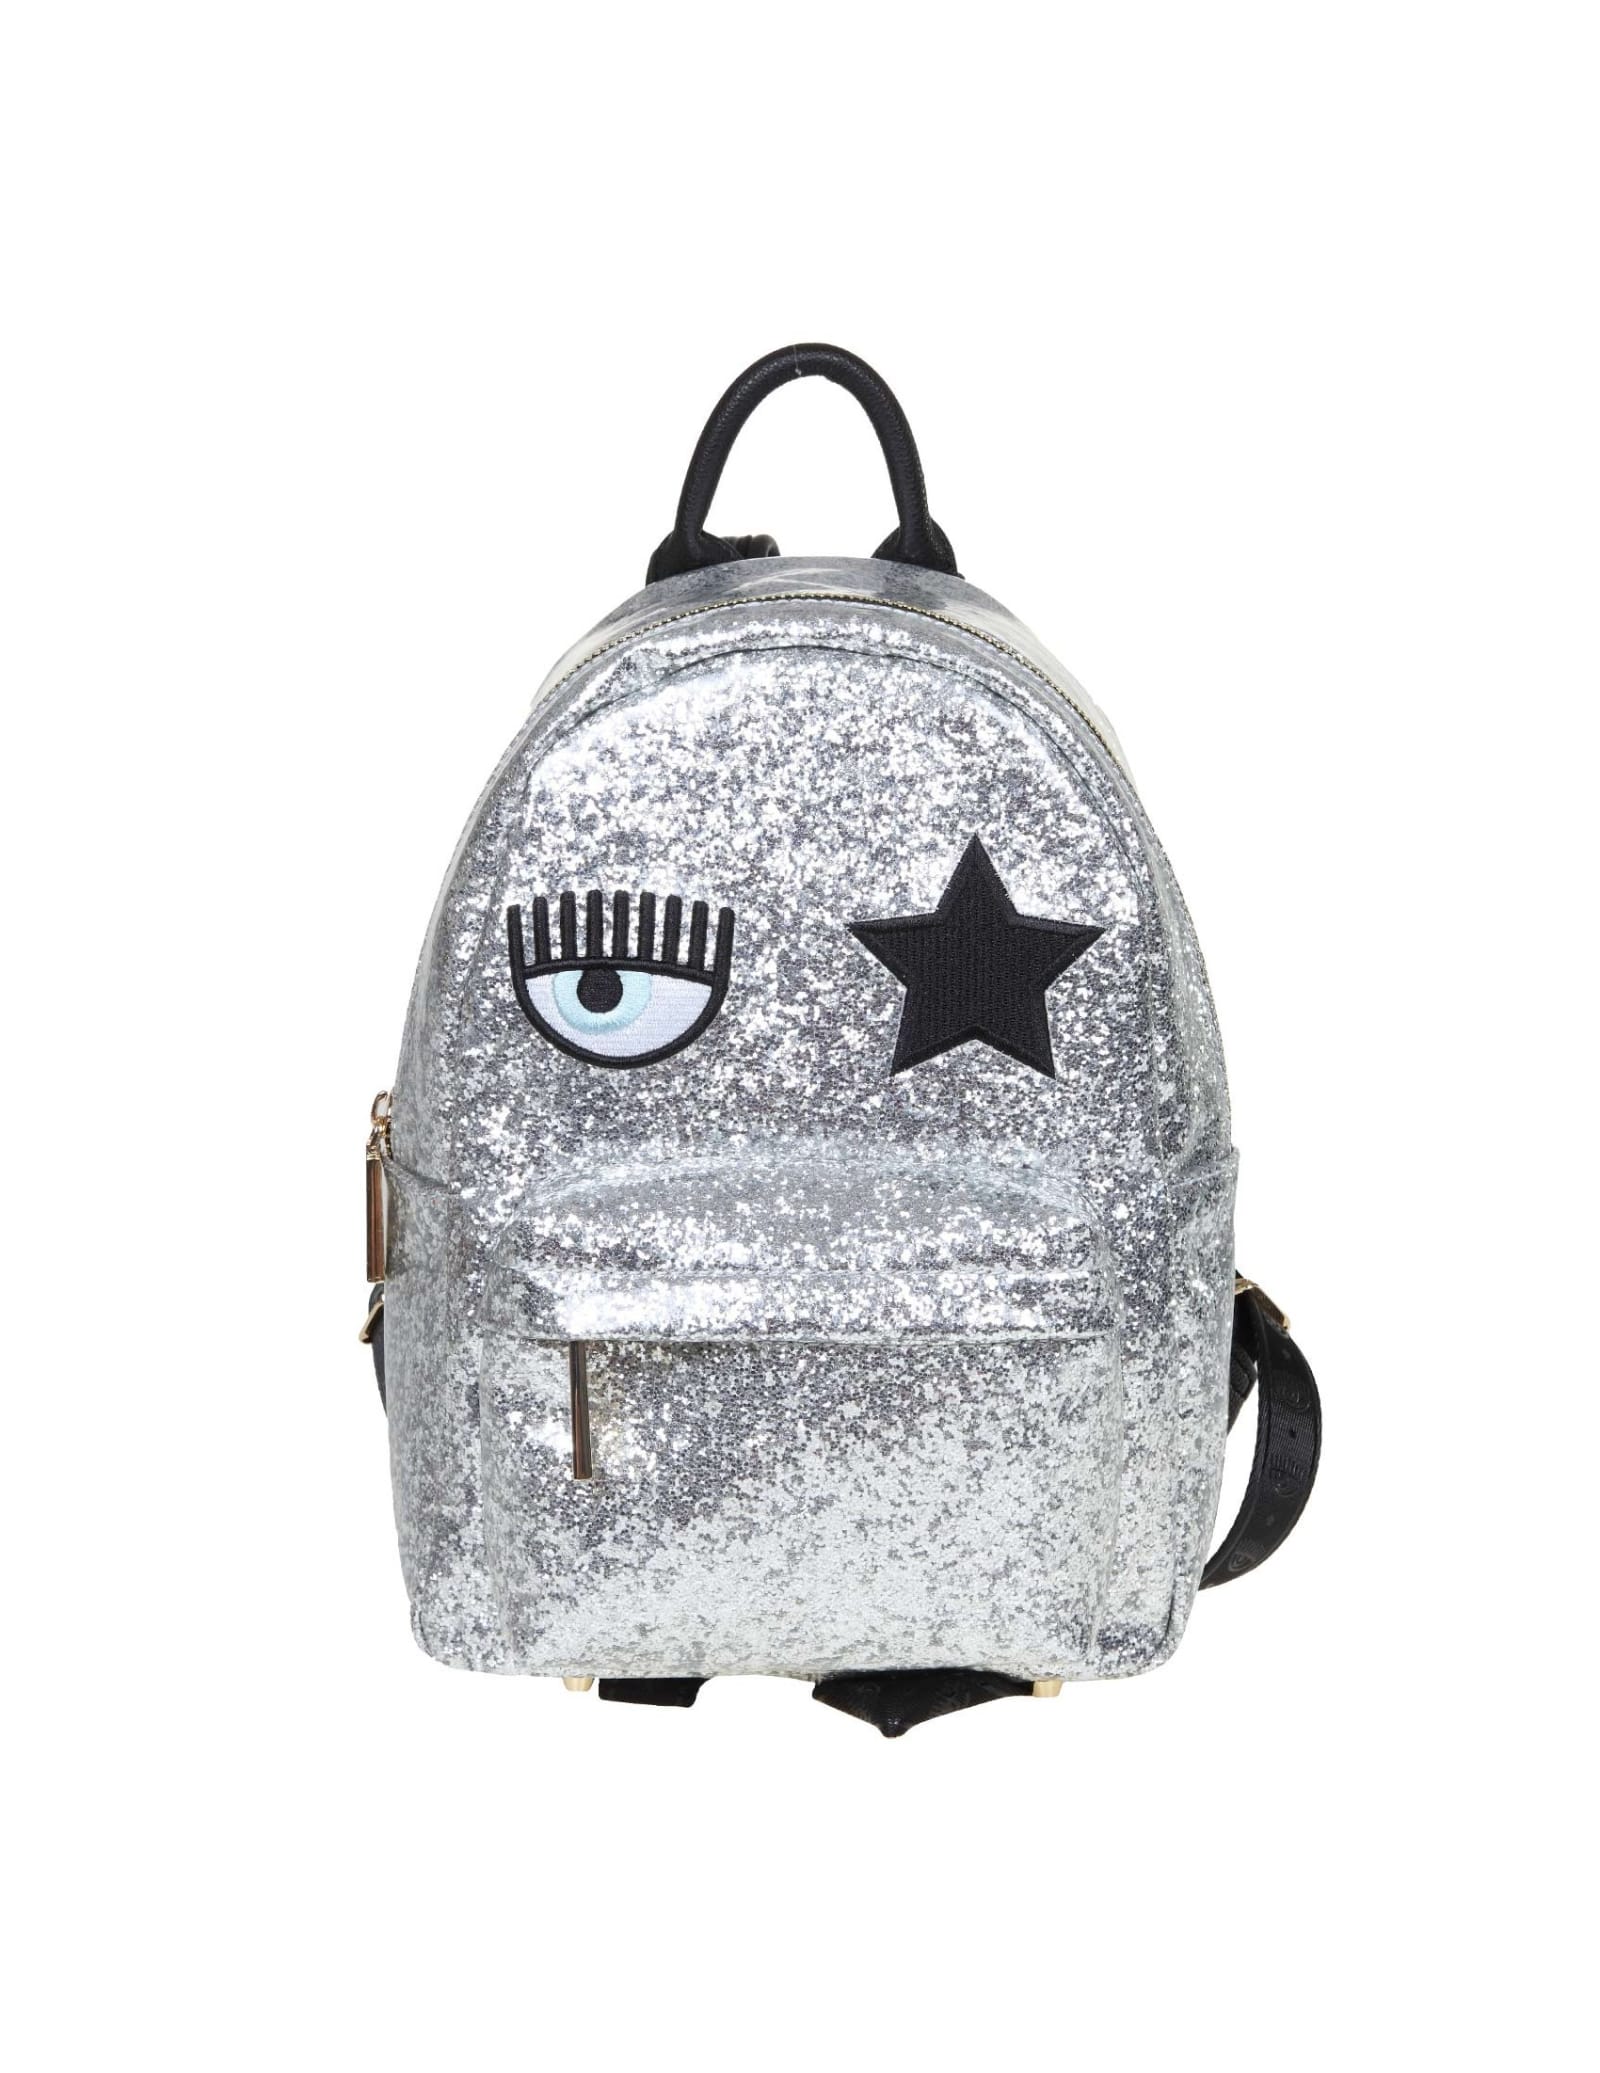 Chiara Ferragni Range Eye Star Backpack In Silver Glitter